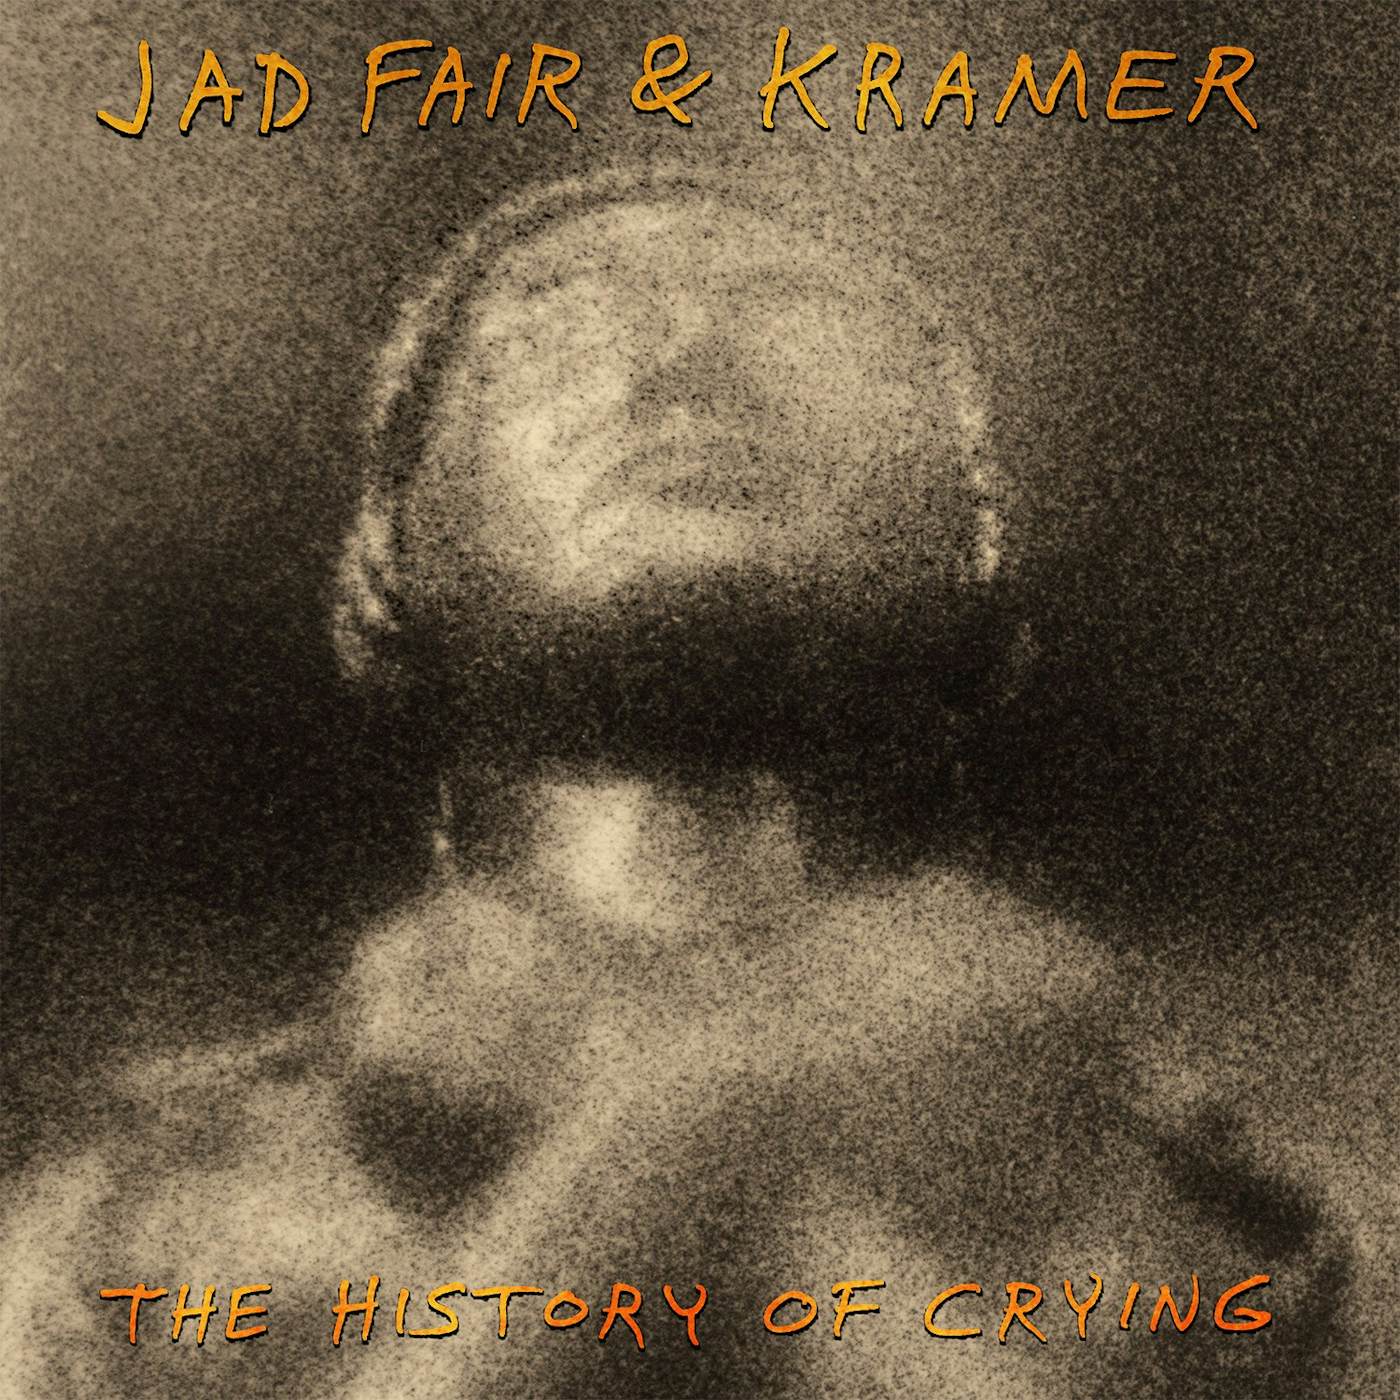 Jad Fair & Kramer